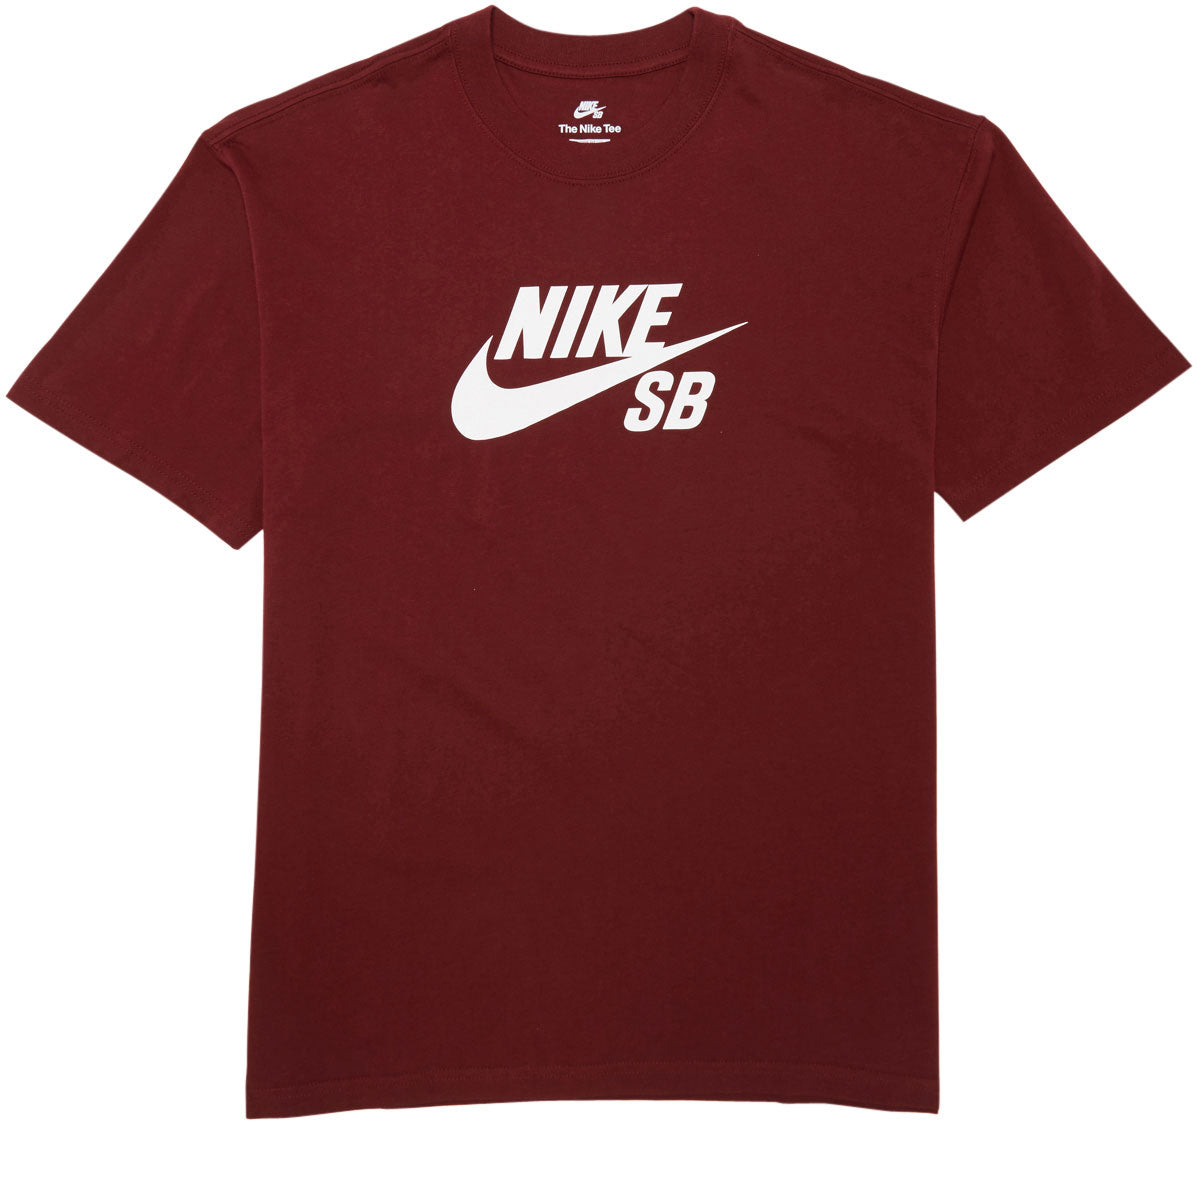 Nike SB Logo T-Shirt - Dark Team Red image 1